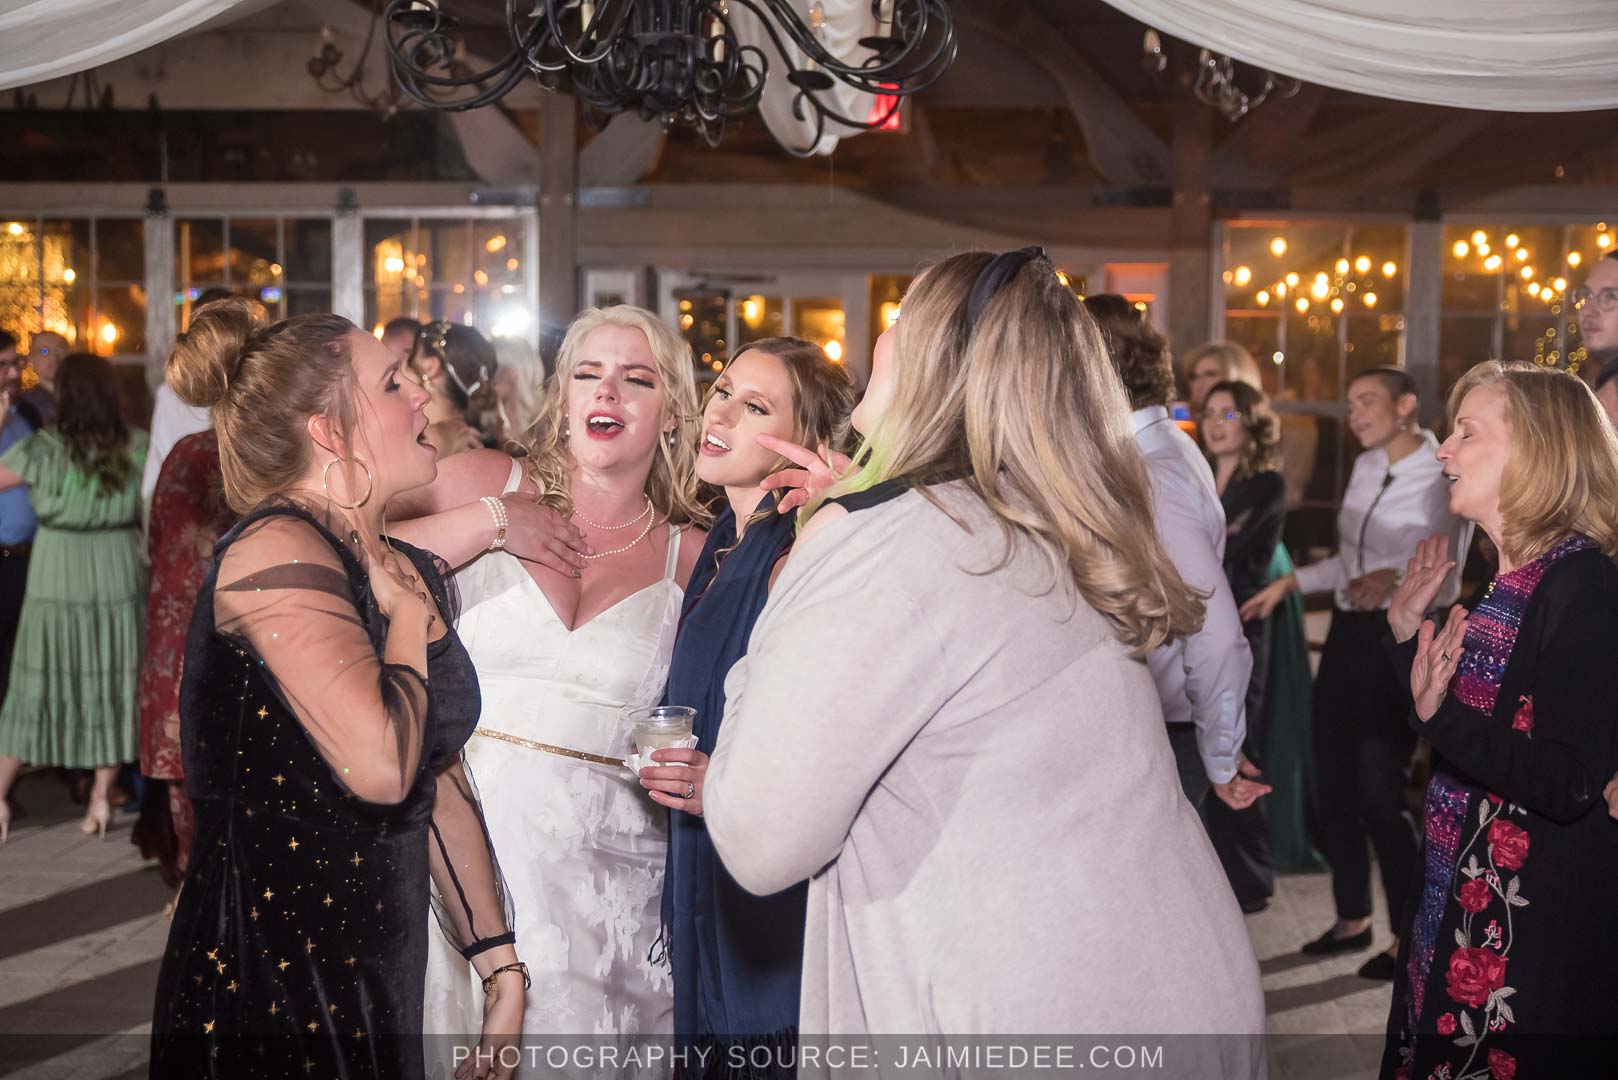 Rocky's Lake Estate Wedding Venue - reception - wedding guest dancing inside pavilion with ceiling drapes - bride singing